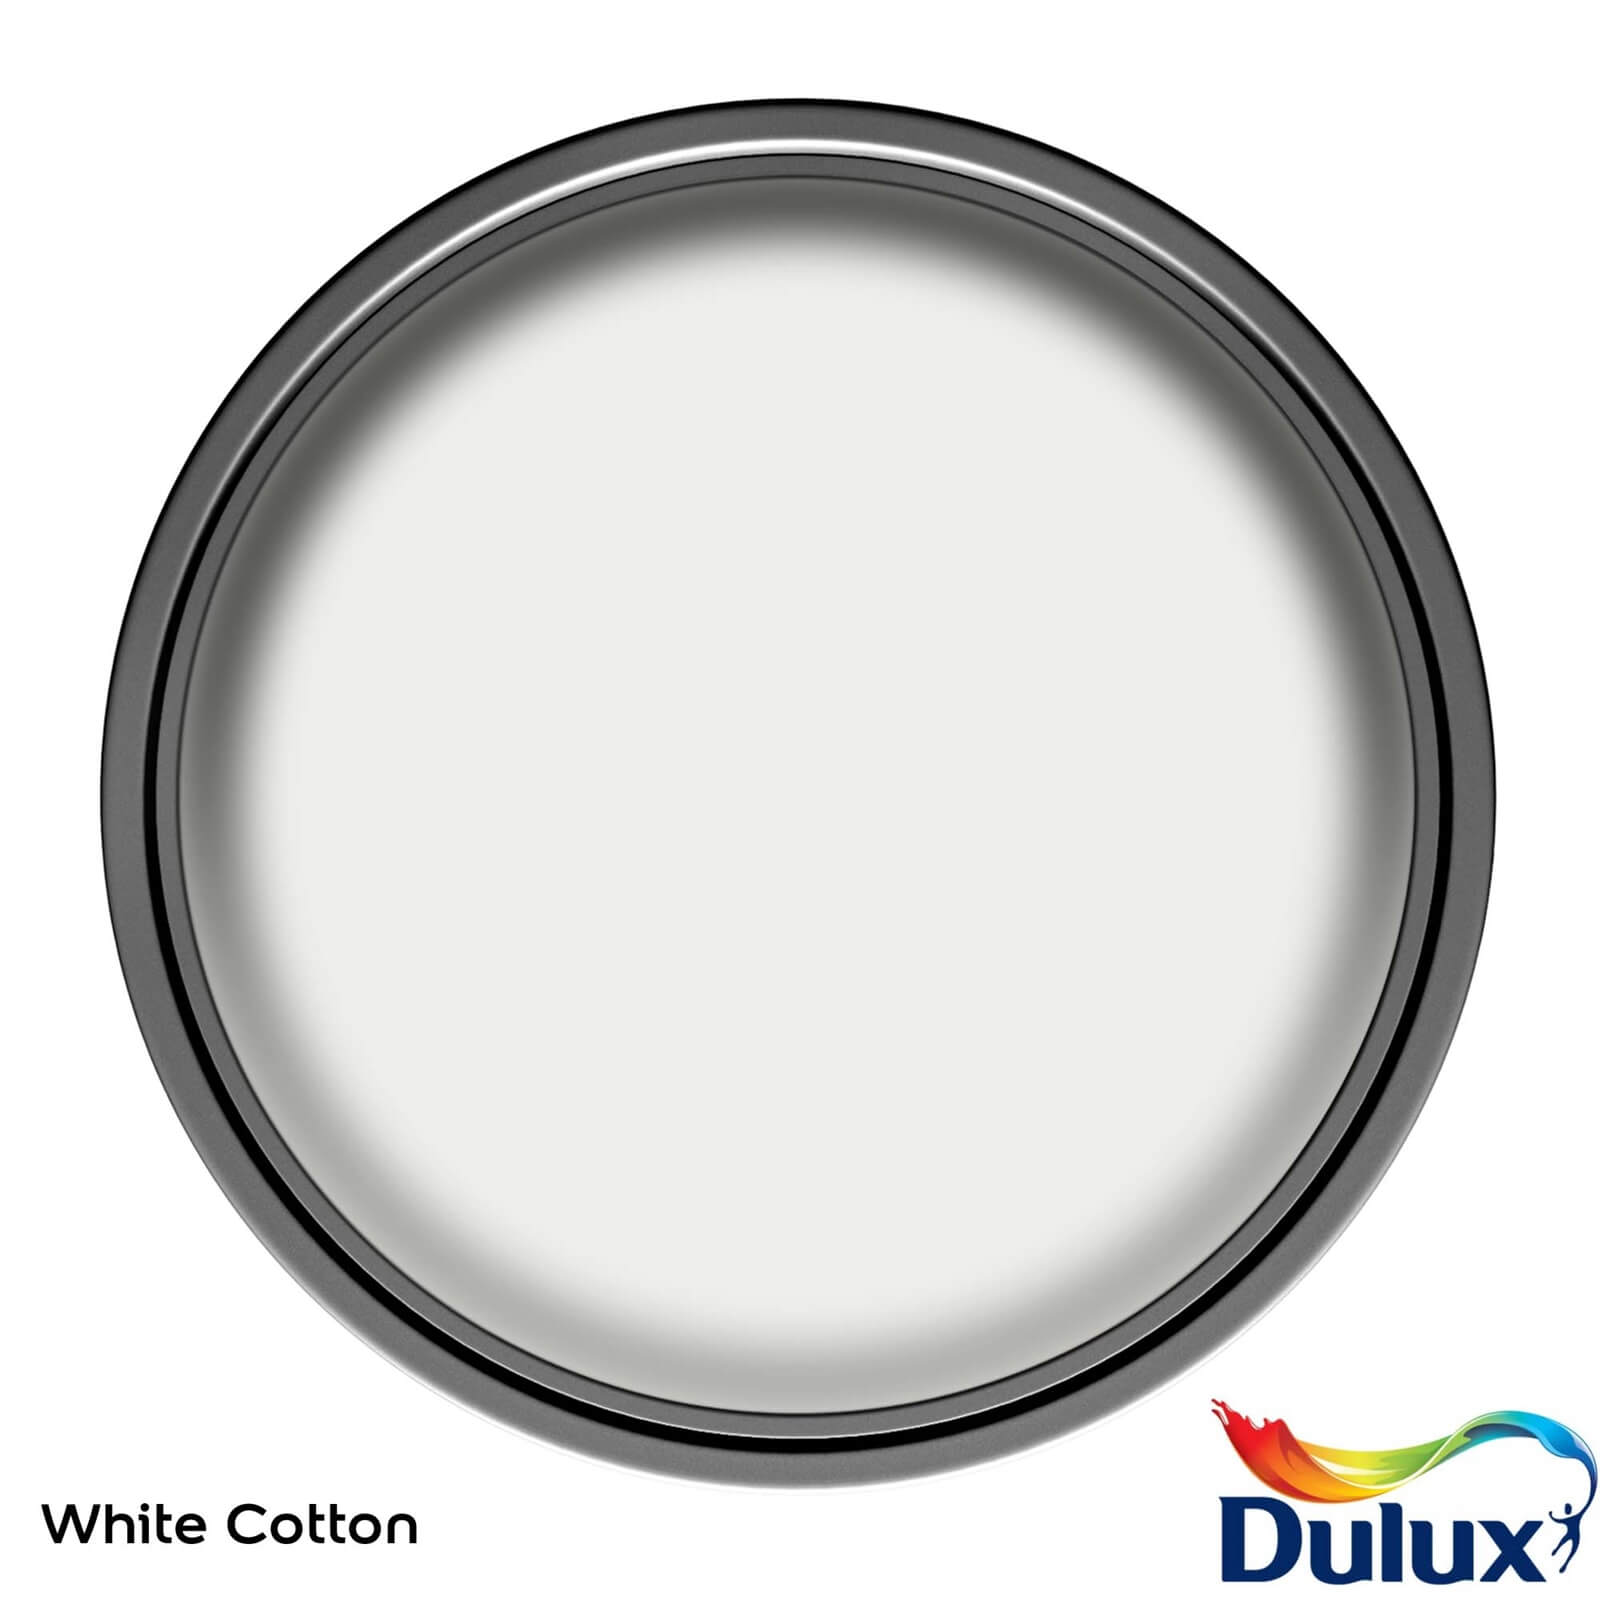 Dulux Quick Dry Satinwood White Cotton - 750ml